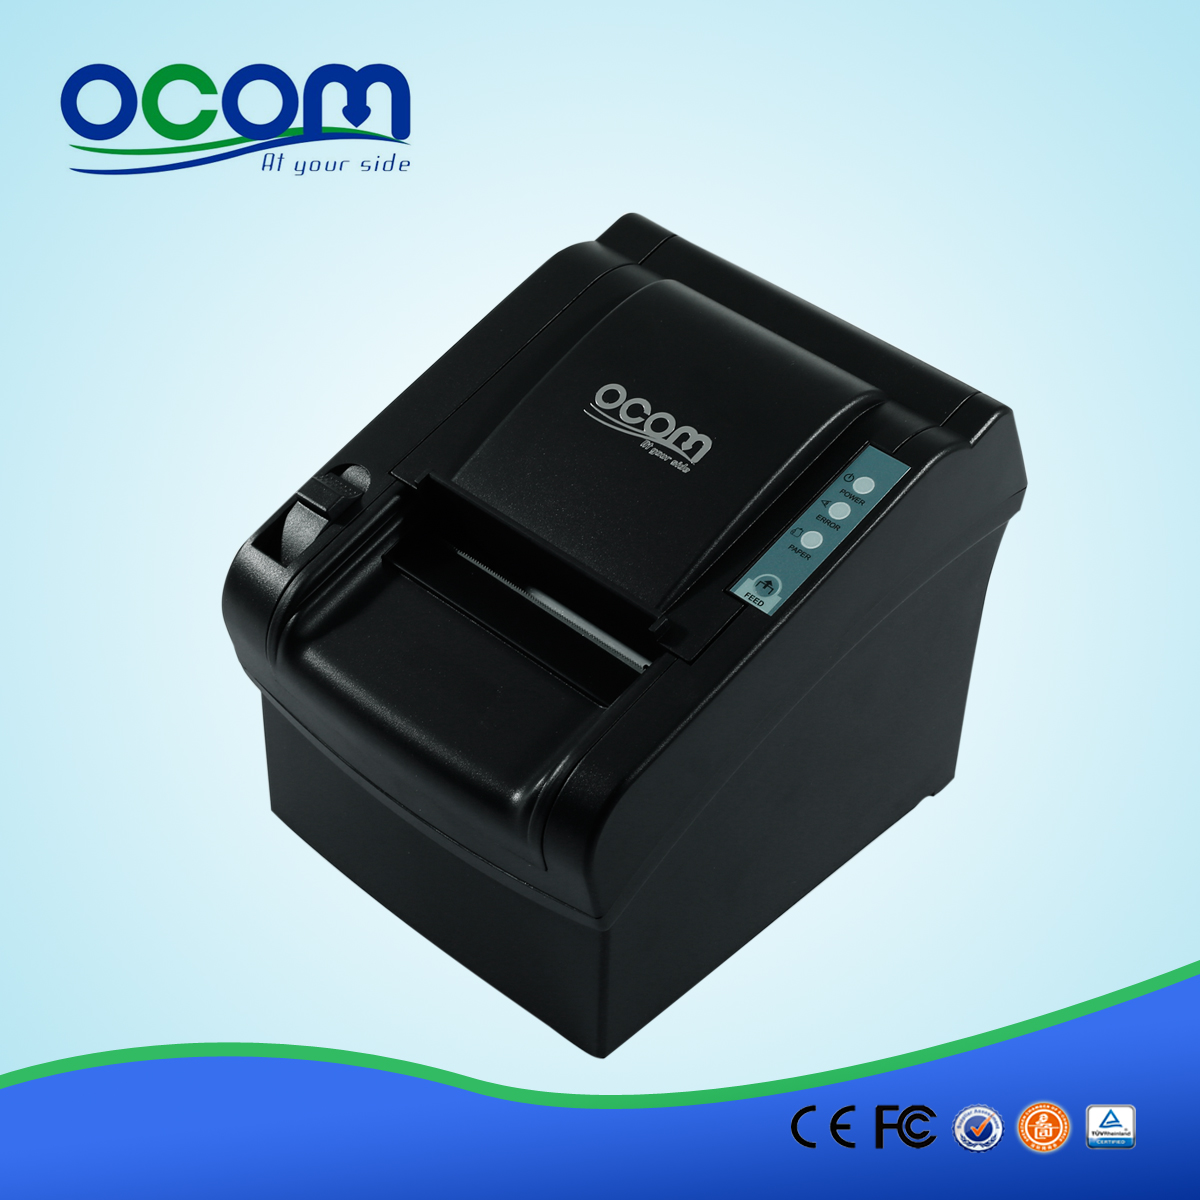 OCPP-802: de fabriek levering pos thermische printer 80 mm, thermisch papier printer